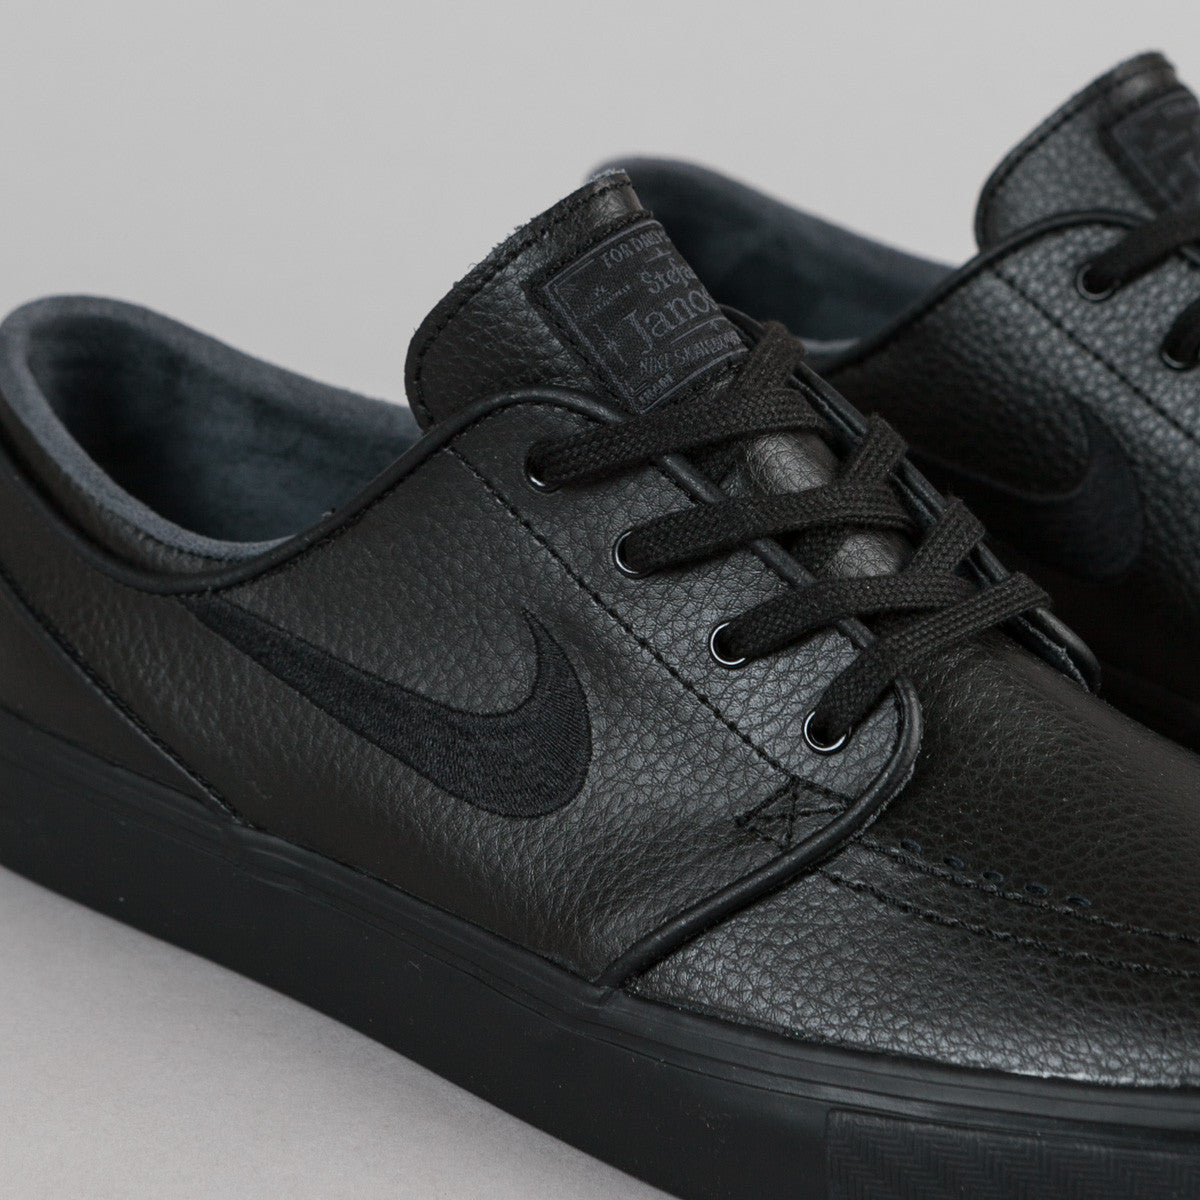 Nike SB Stefan Janoski Leather Shoes - Black / Black - Black - Anthrac ...